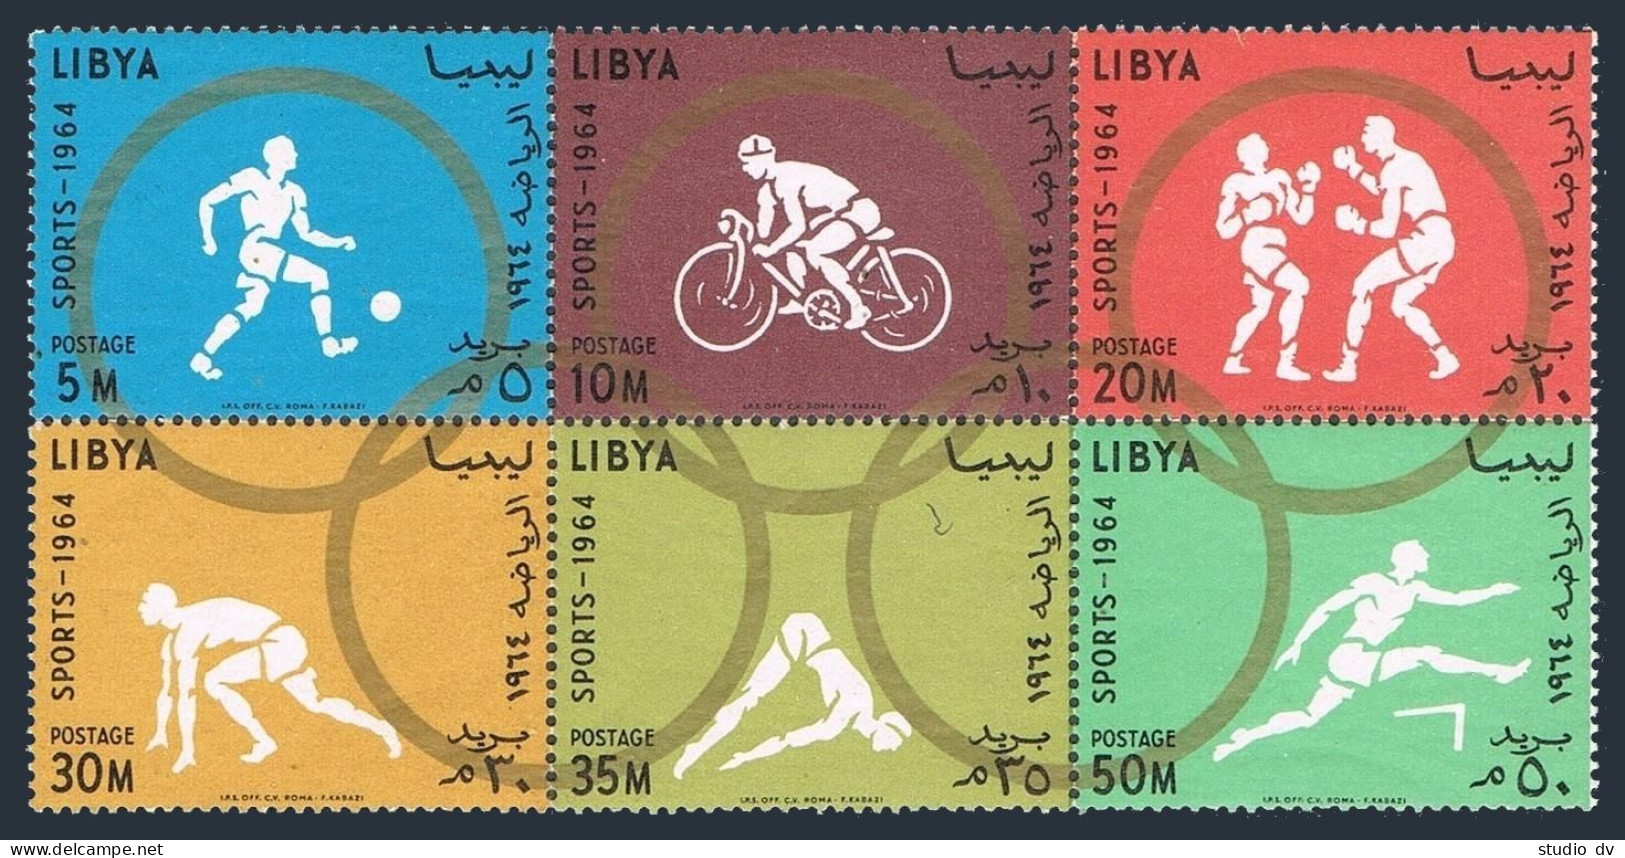 Libya 258-263a Perf & Imperf, MNH. Olympics Tokyo-1964. Soccer,Bicycling,Boxing, - Libye